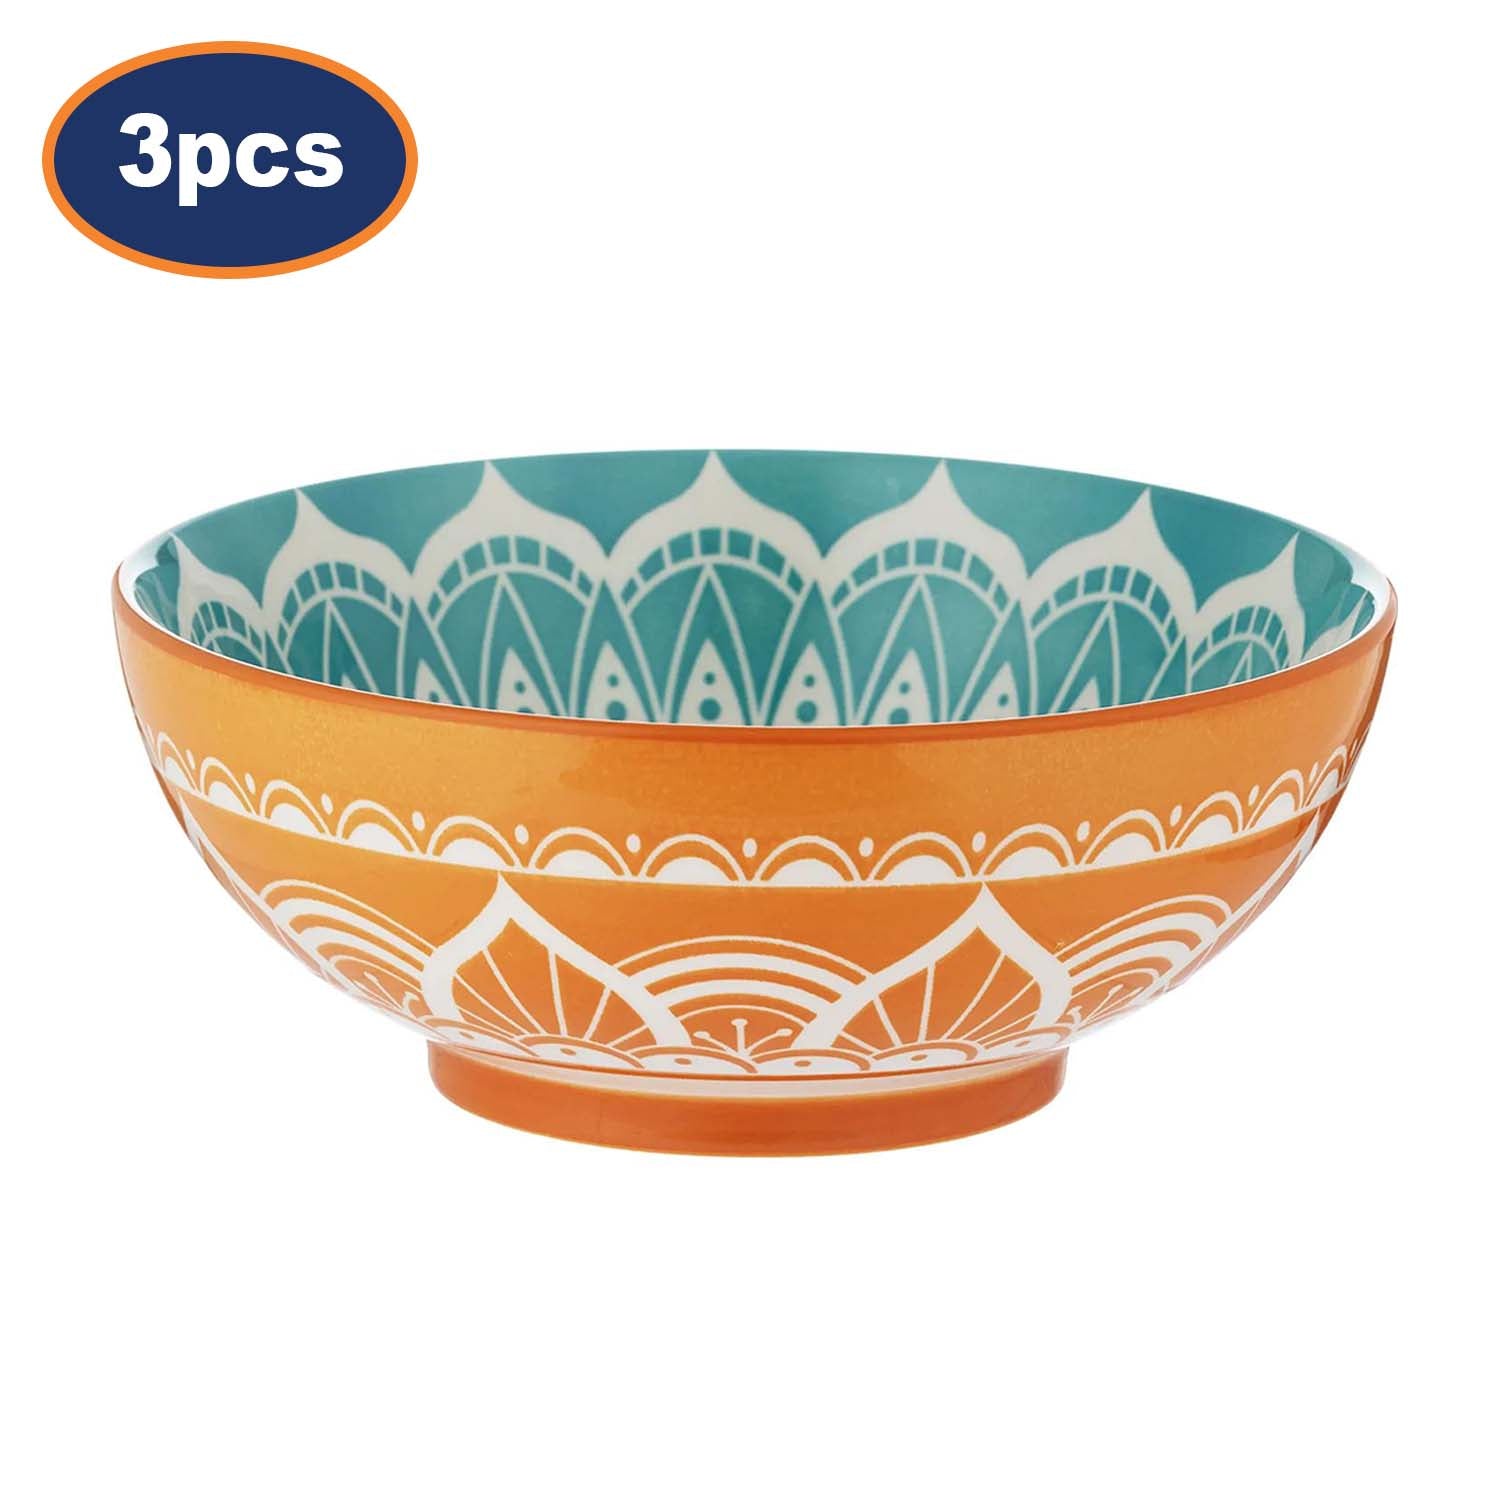 3Pcs World Foods 20cm Green & India Orange Stoneware Serving Bowls